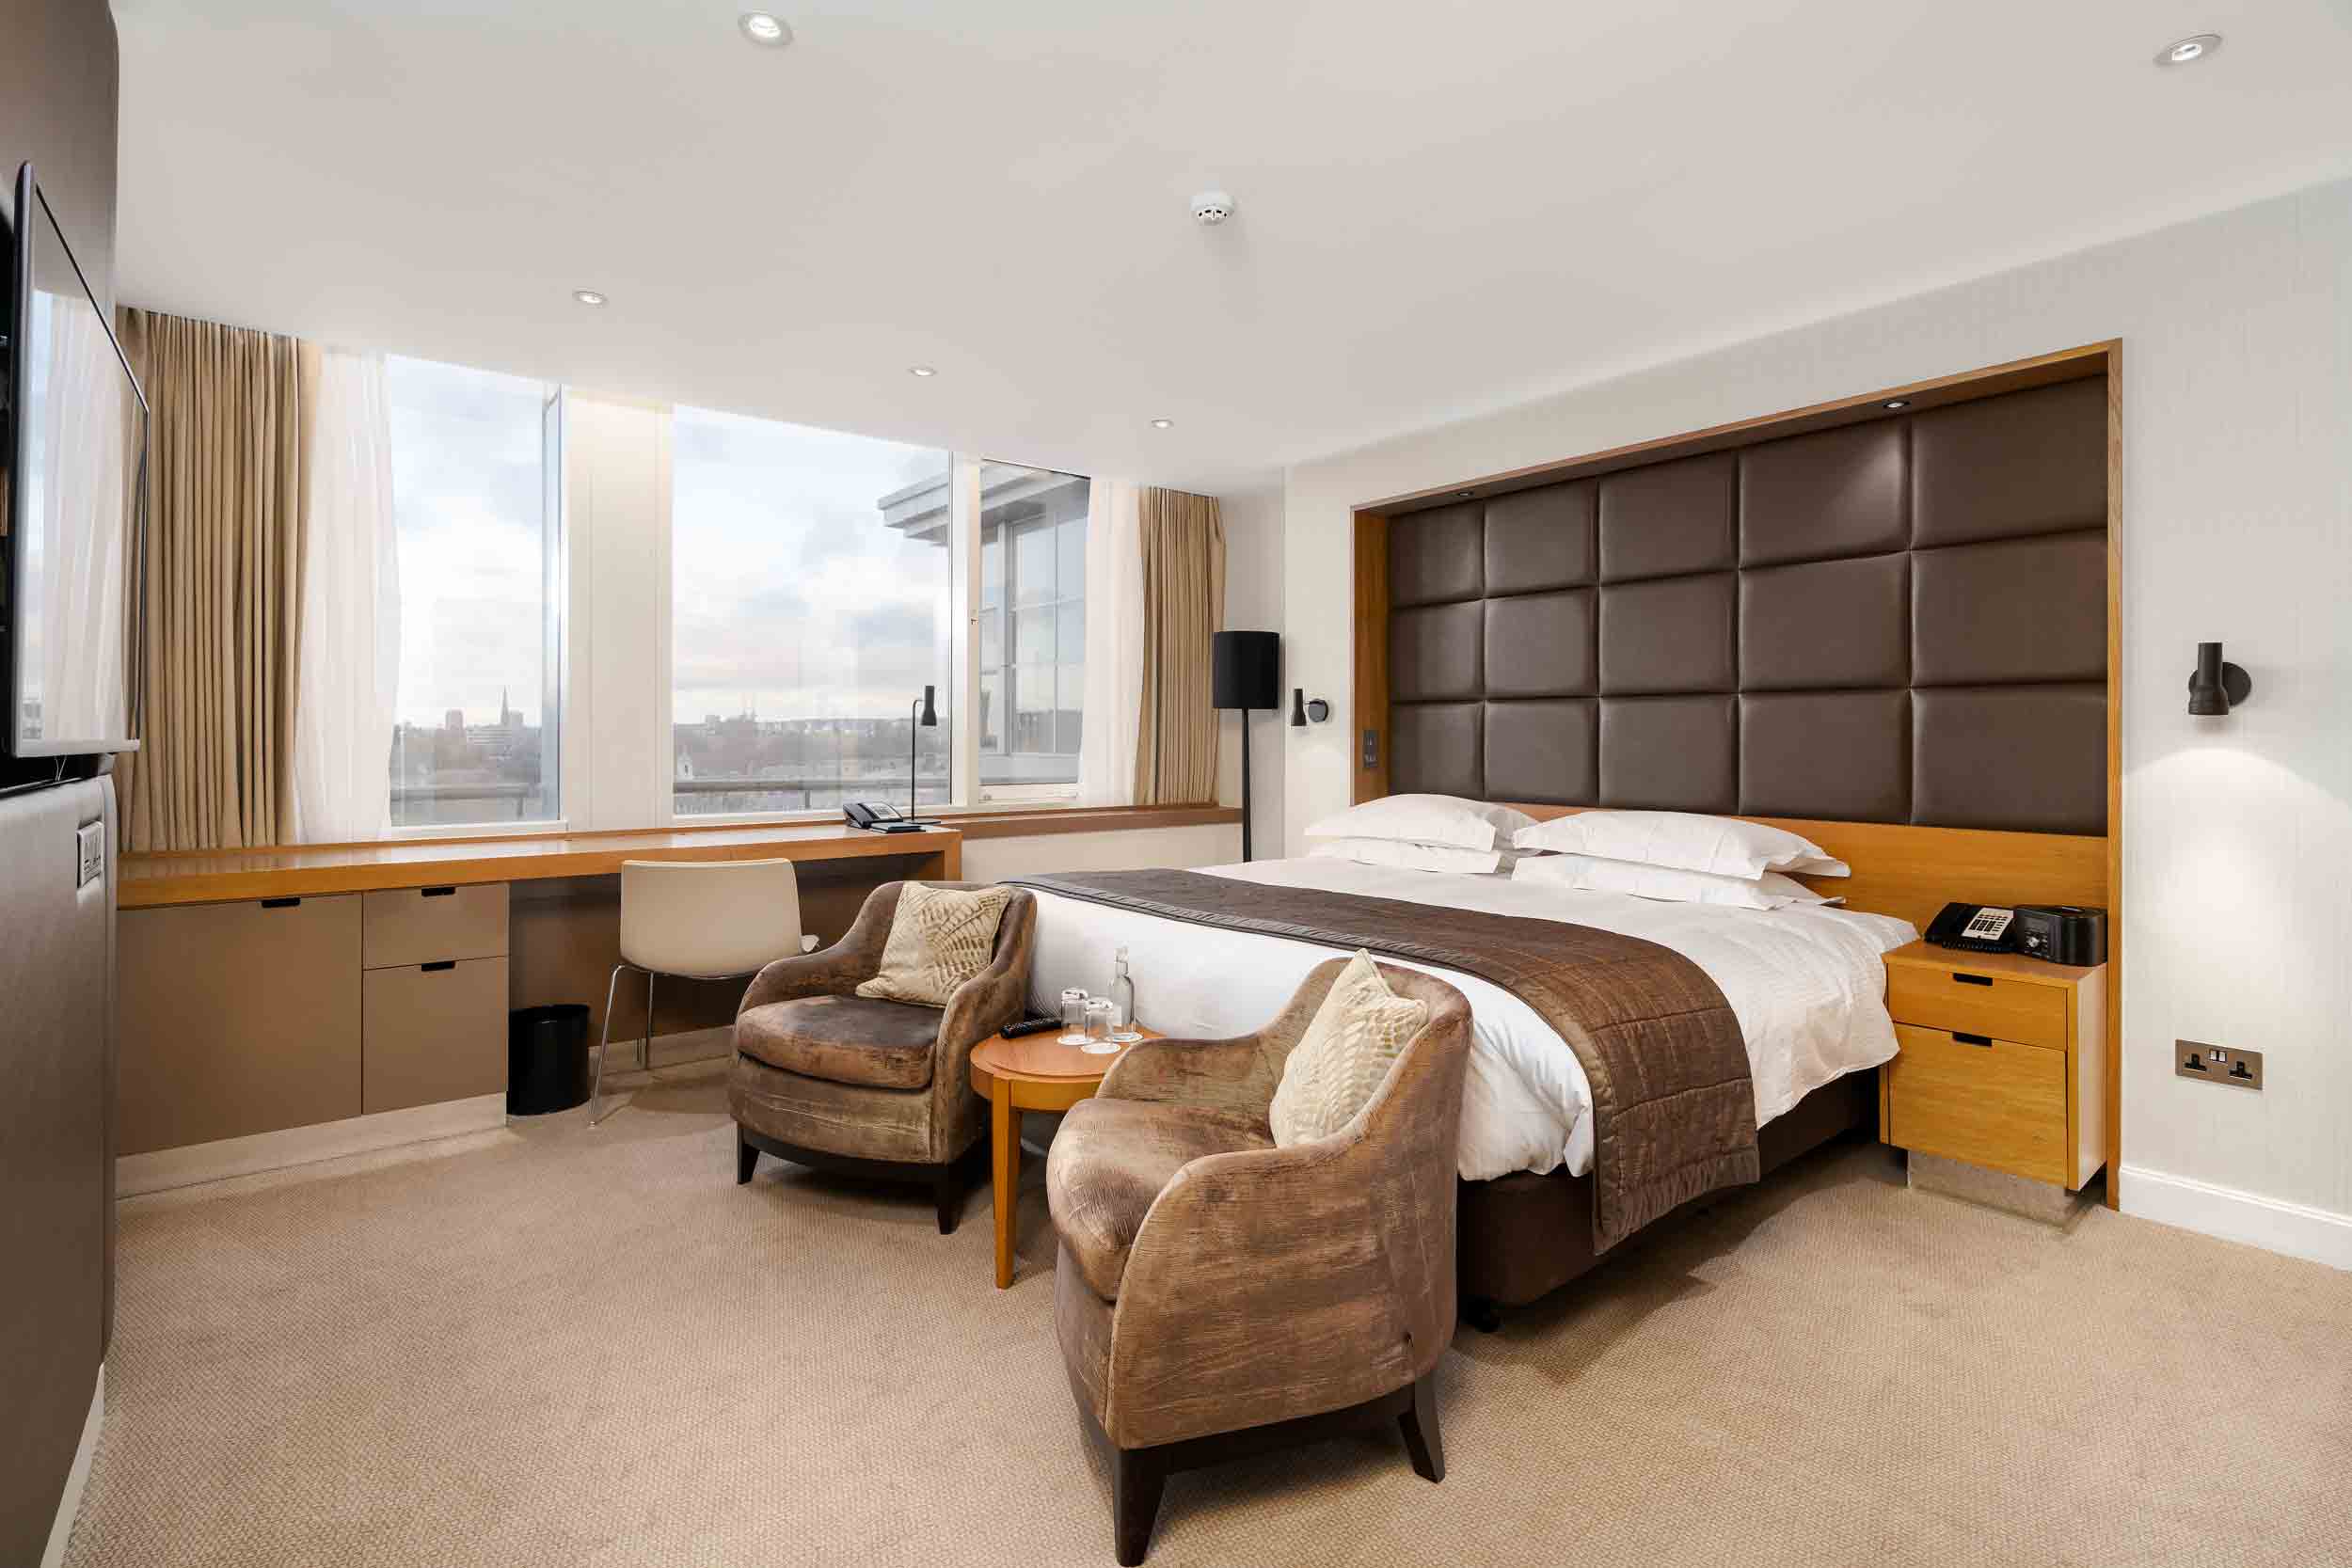 bedroom 1 - hotel royal garden - london, united kingdom